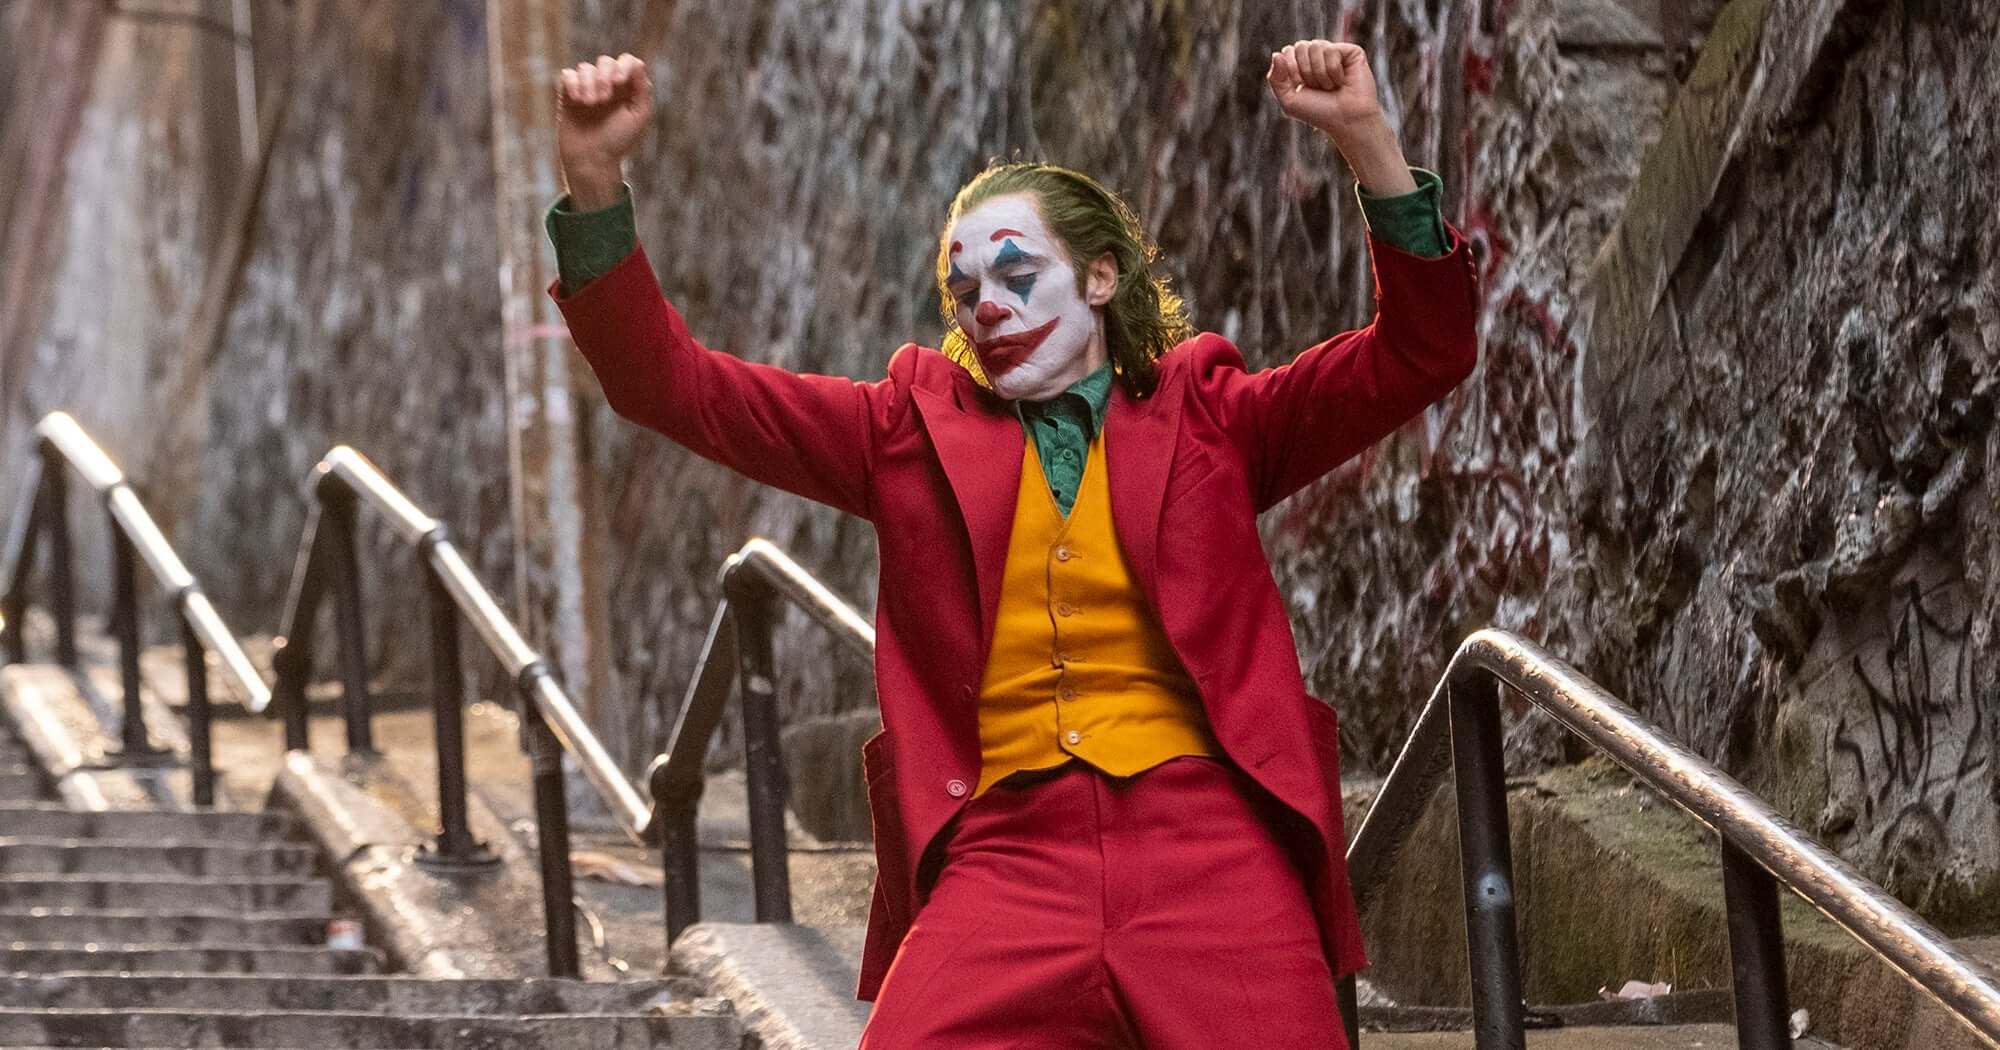 Joker Dancing at $1 billion